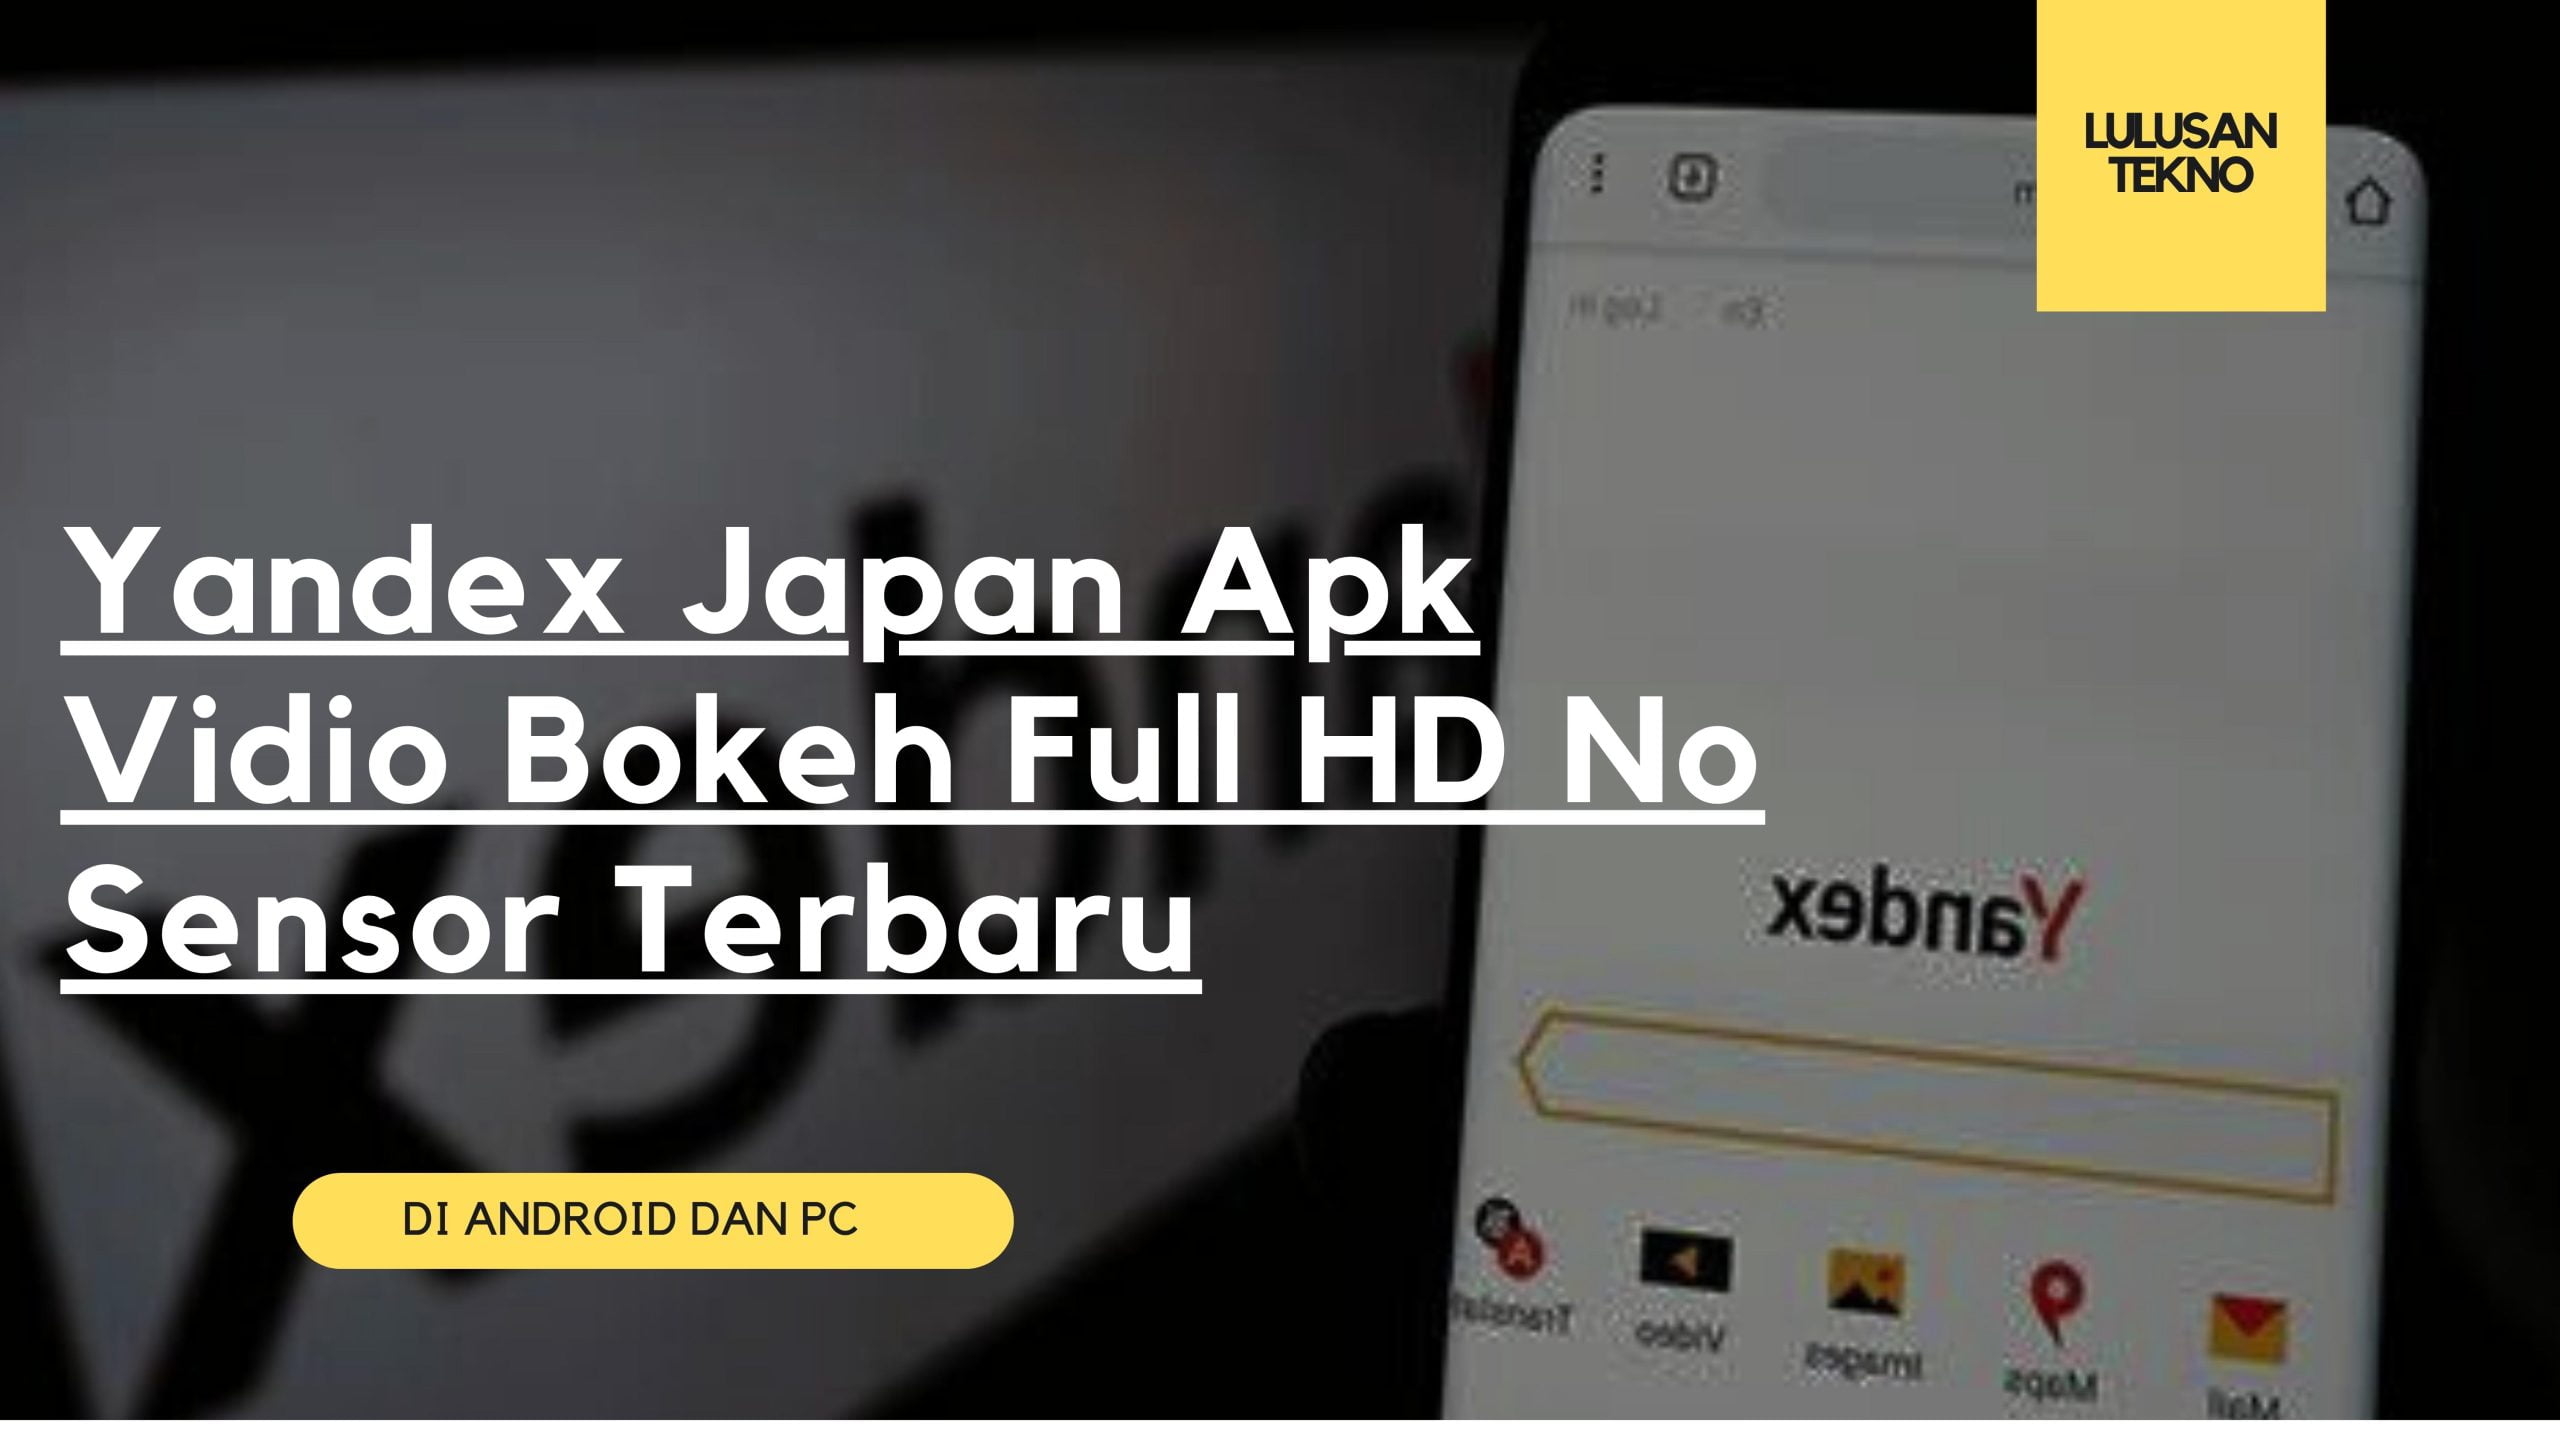 Yandex Japan Apk Vidio Bokeh Full HD No Sensor Terbaru